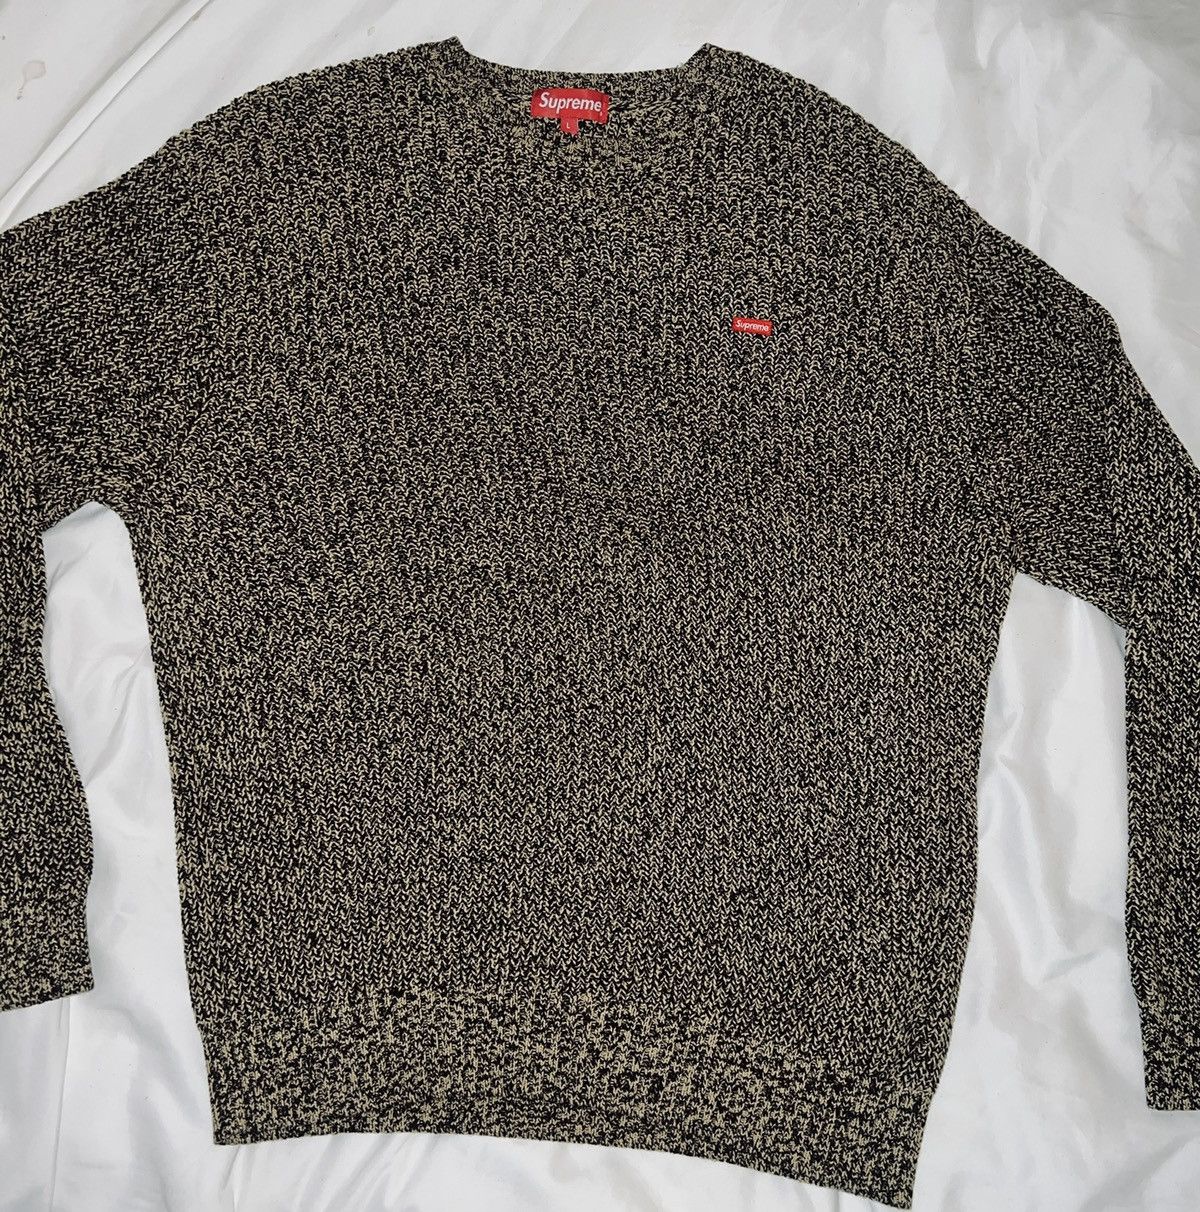 Supreme Supreme Melange Rib Knit Sweater | Grailed